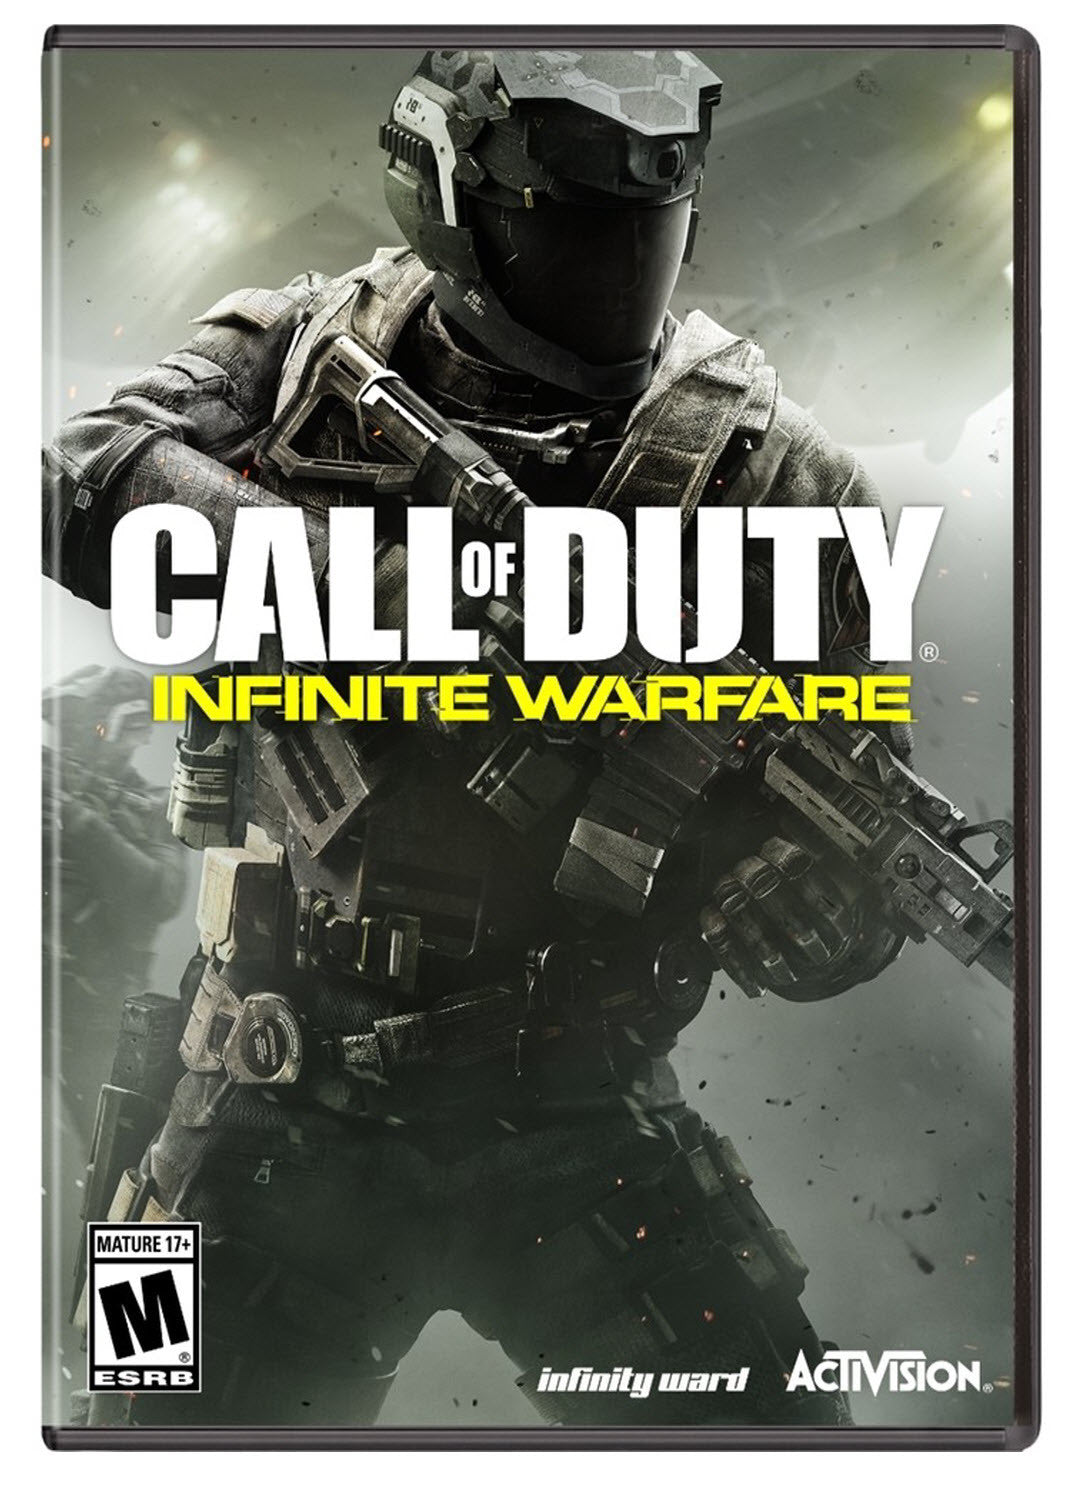 Call of Duty Infinite Warfare Huge Crate + Game Bundle - PC